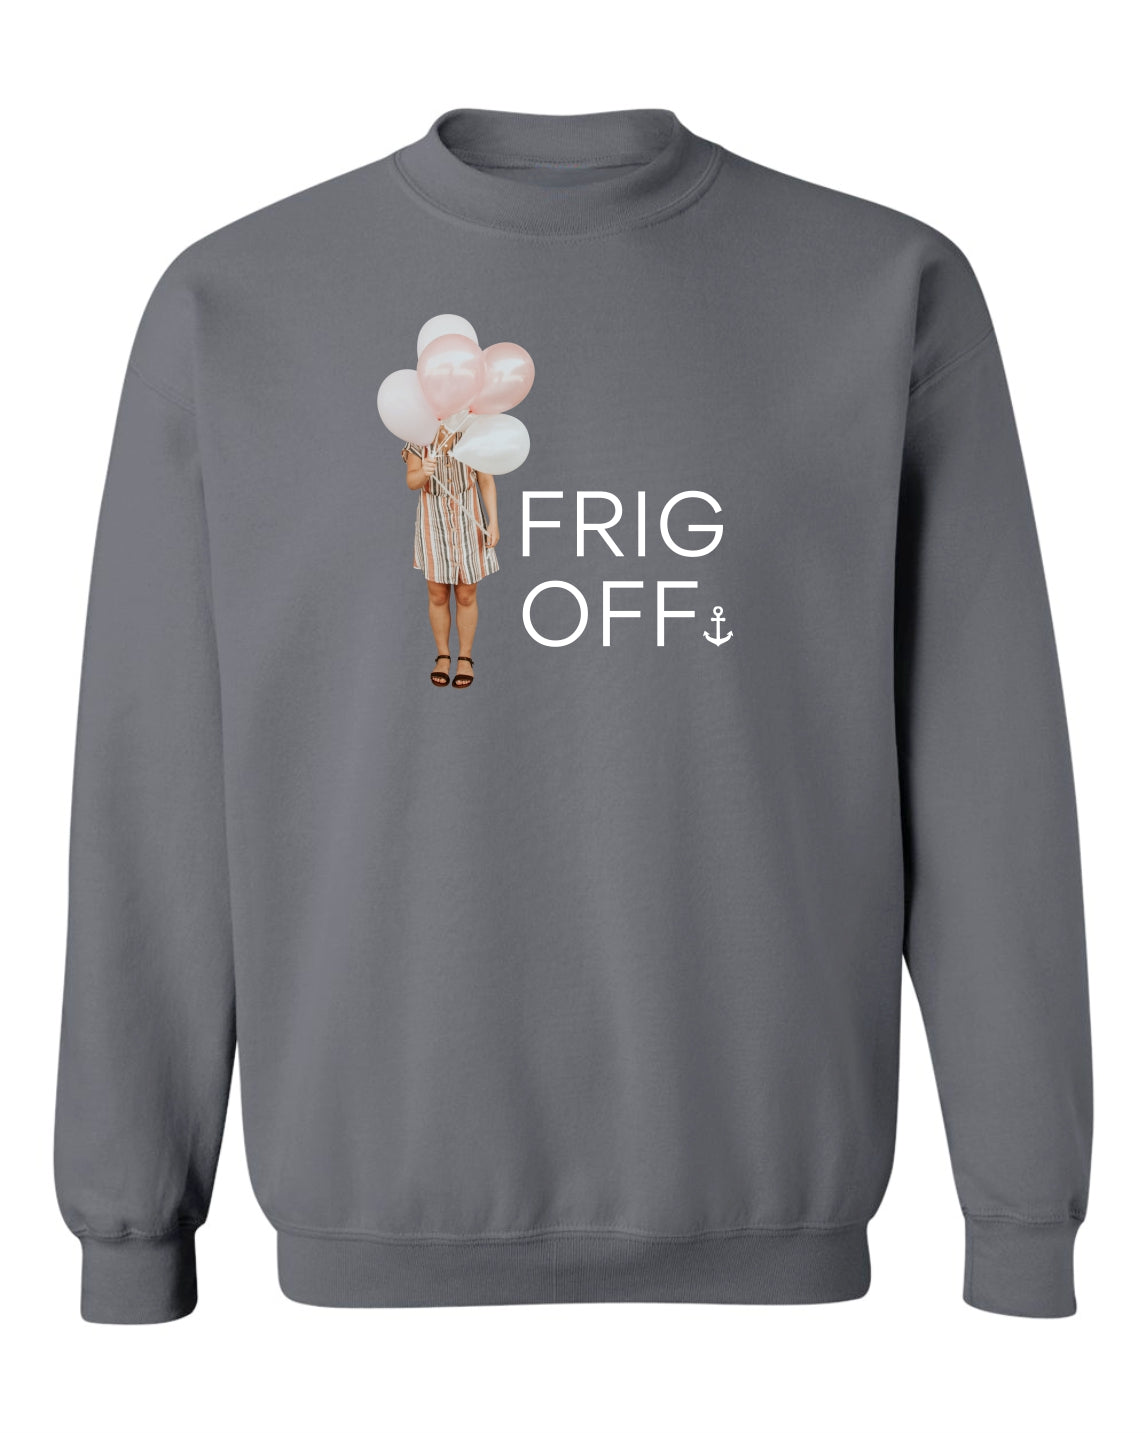 "Frig Off" Balloon Girl Unisex Crewneck Sweatshirt